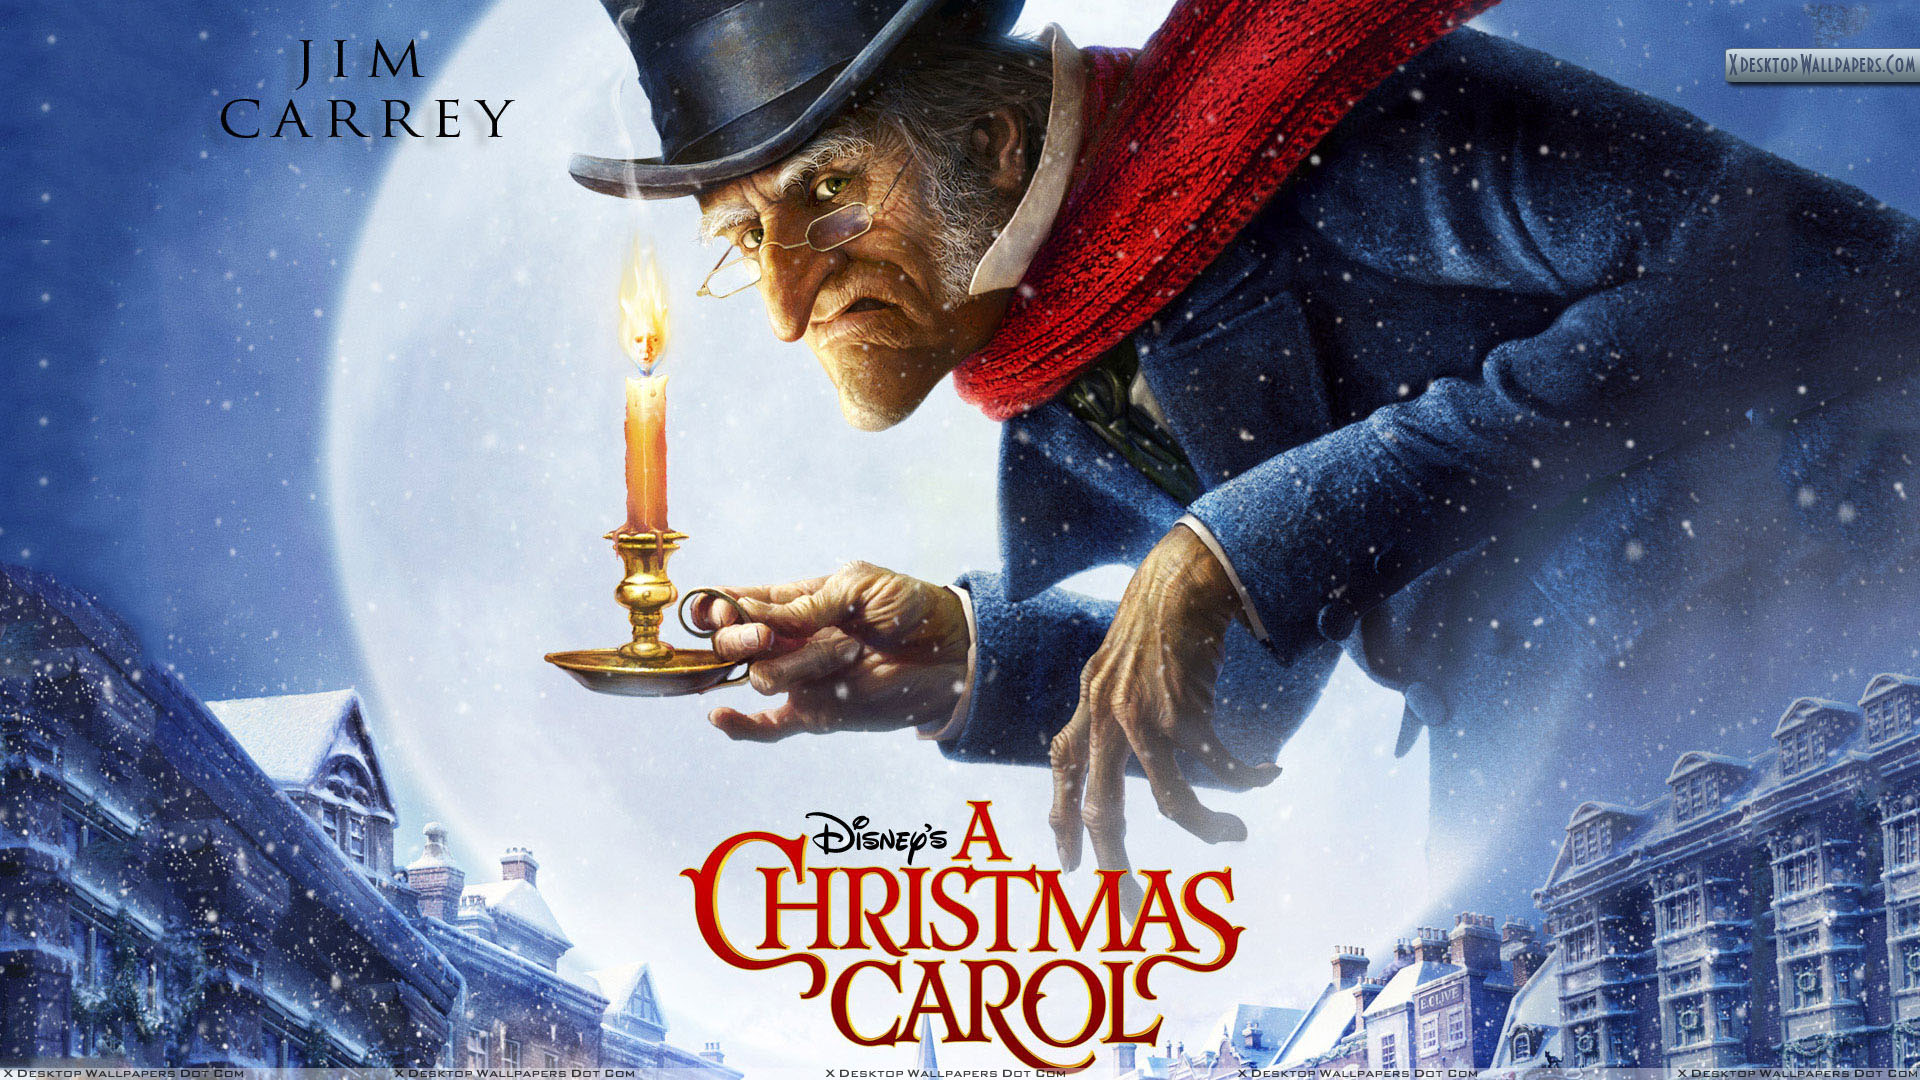 "Christmas Movie"
2. "A Christmas Carol" - wide 3